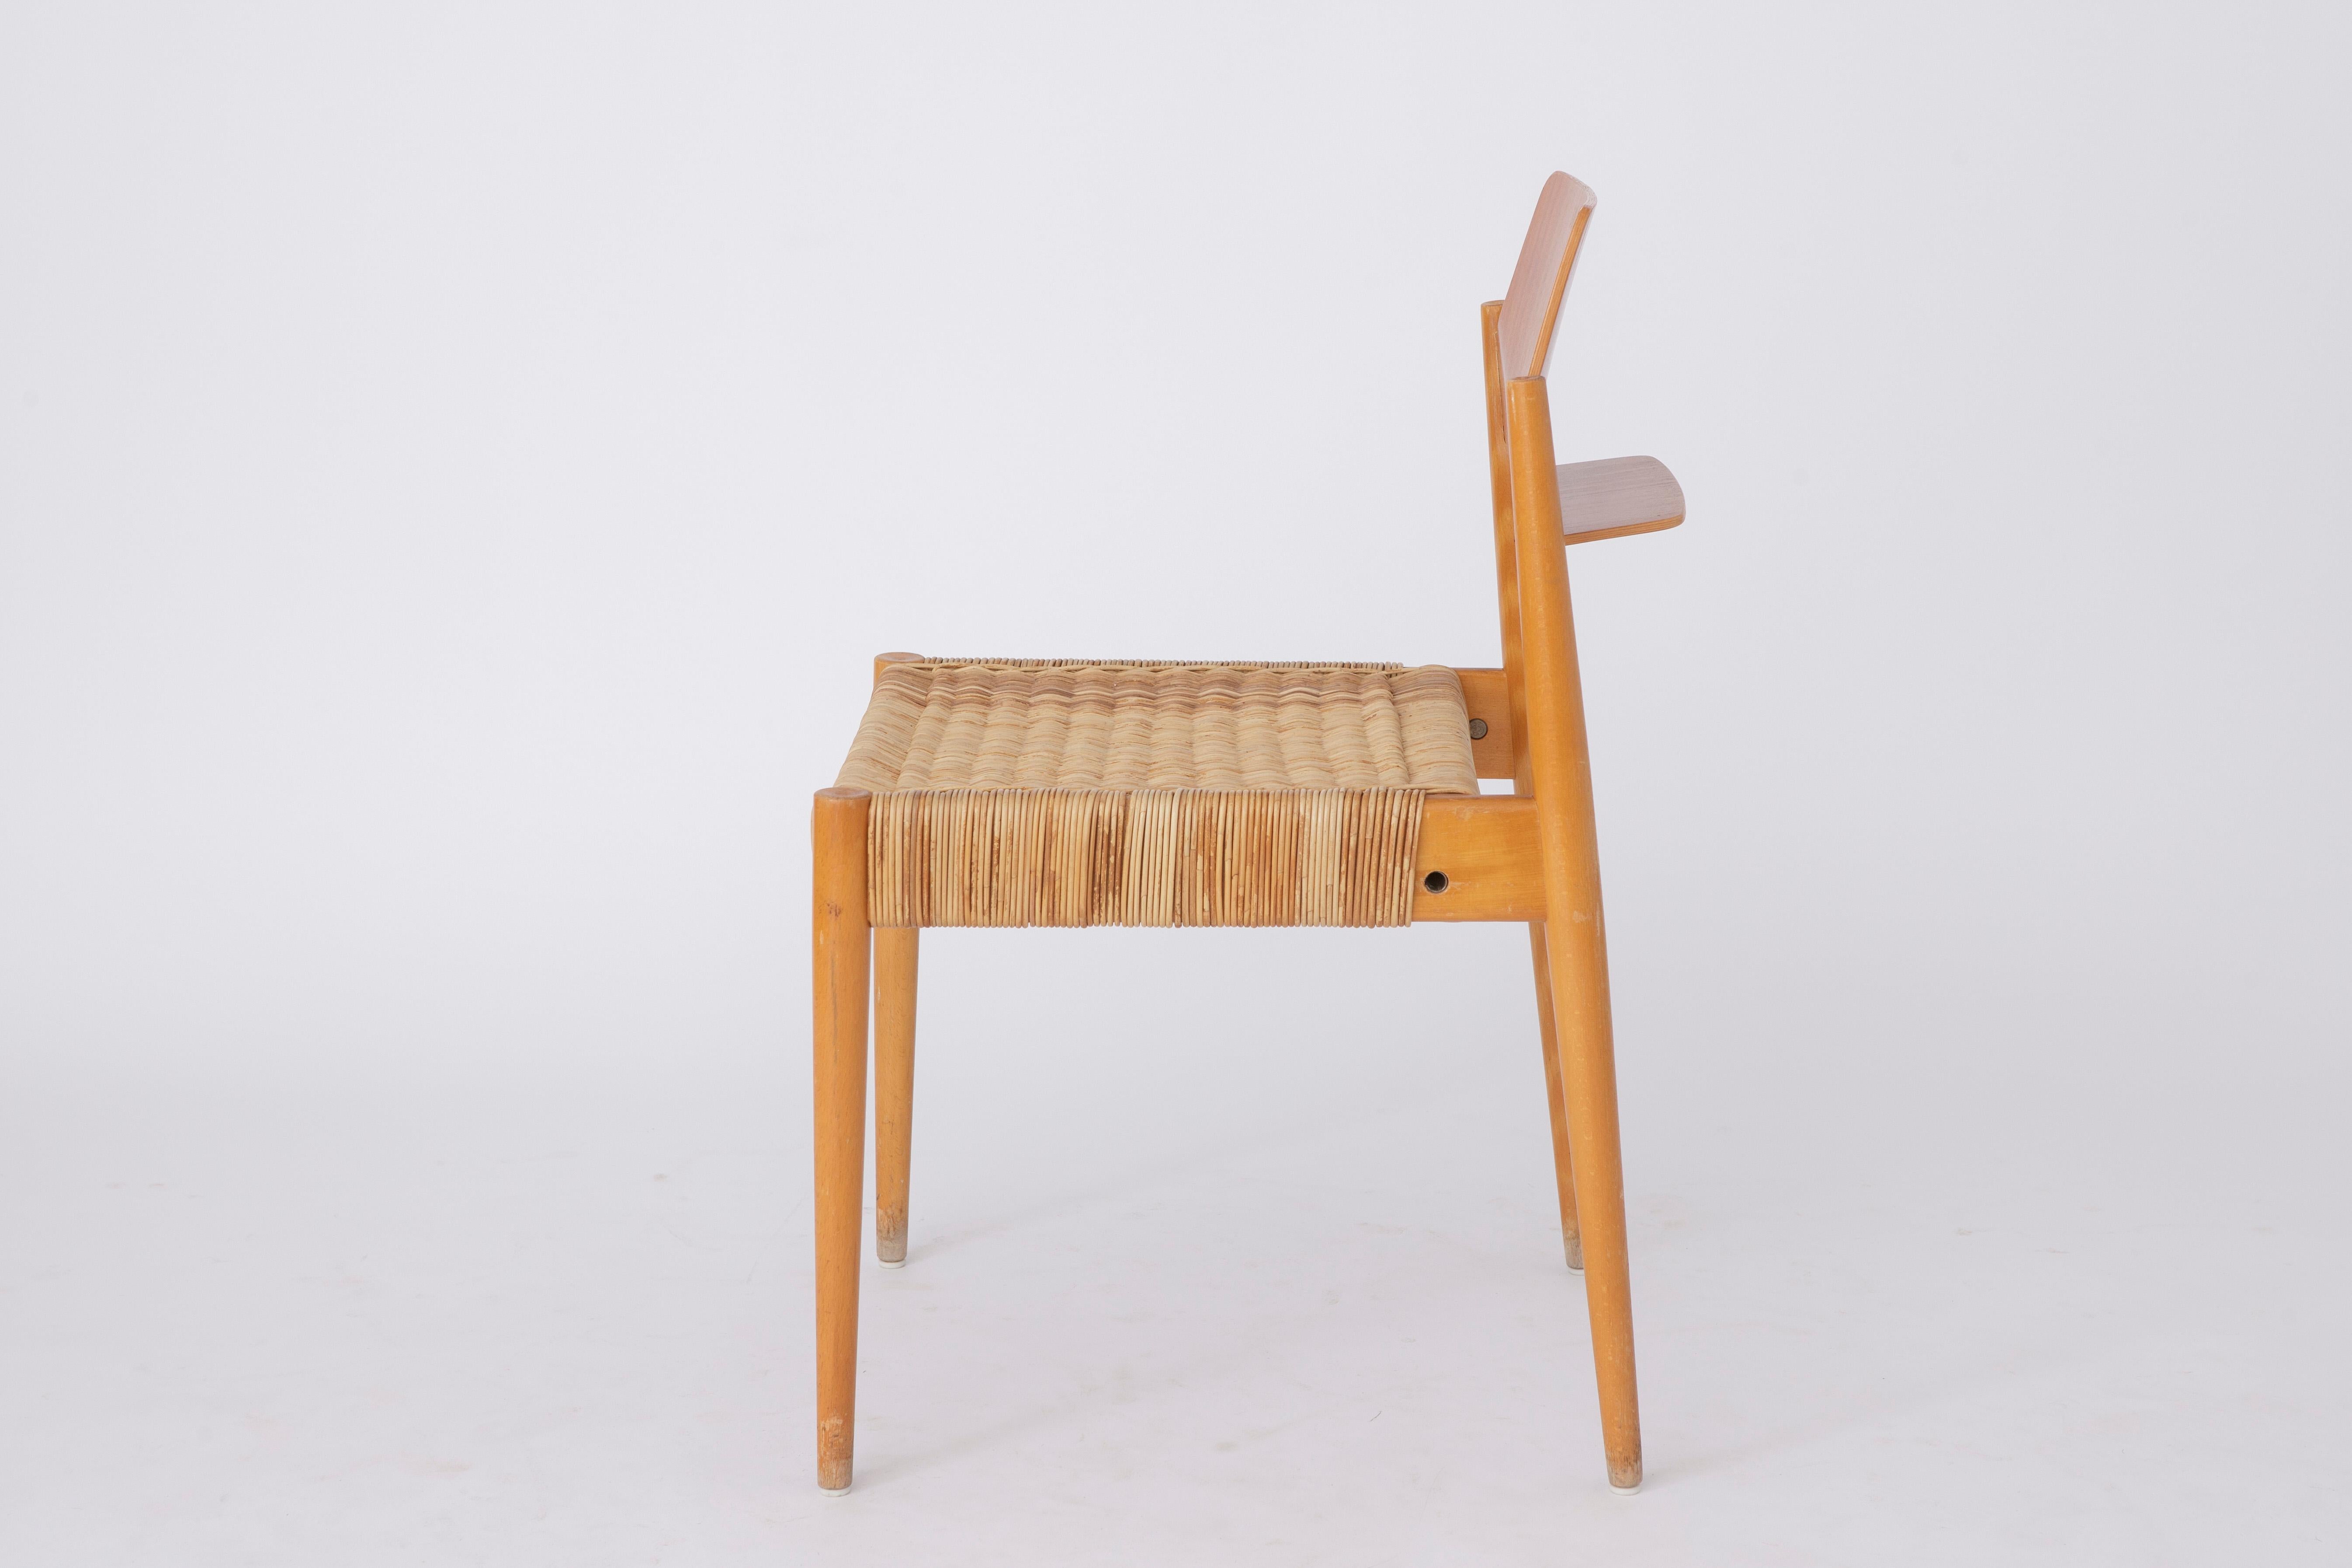 Teak 6 Chairs Egon Eiermann Chairs #SE19 Bauhaus Germany 1950s Vintage For Sale